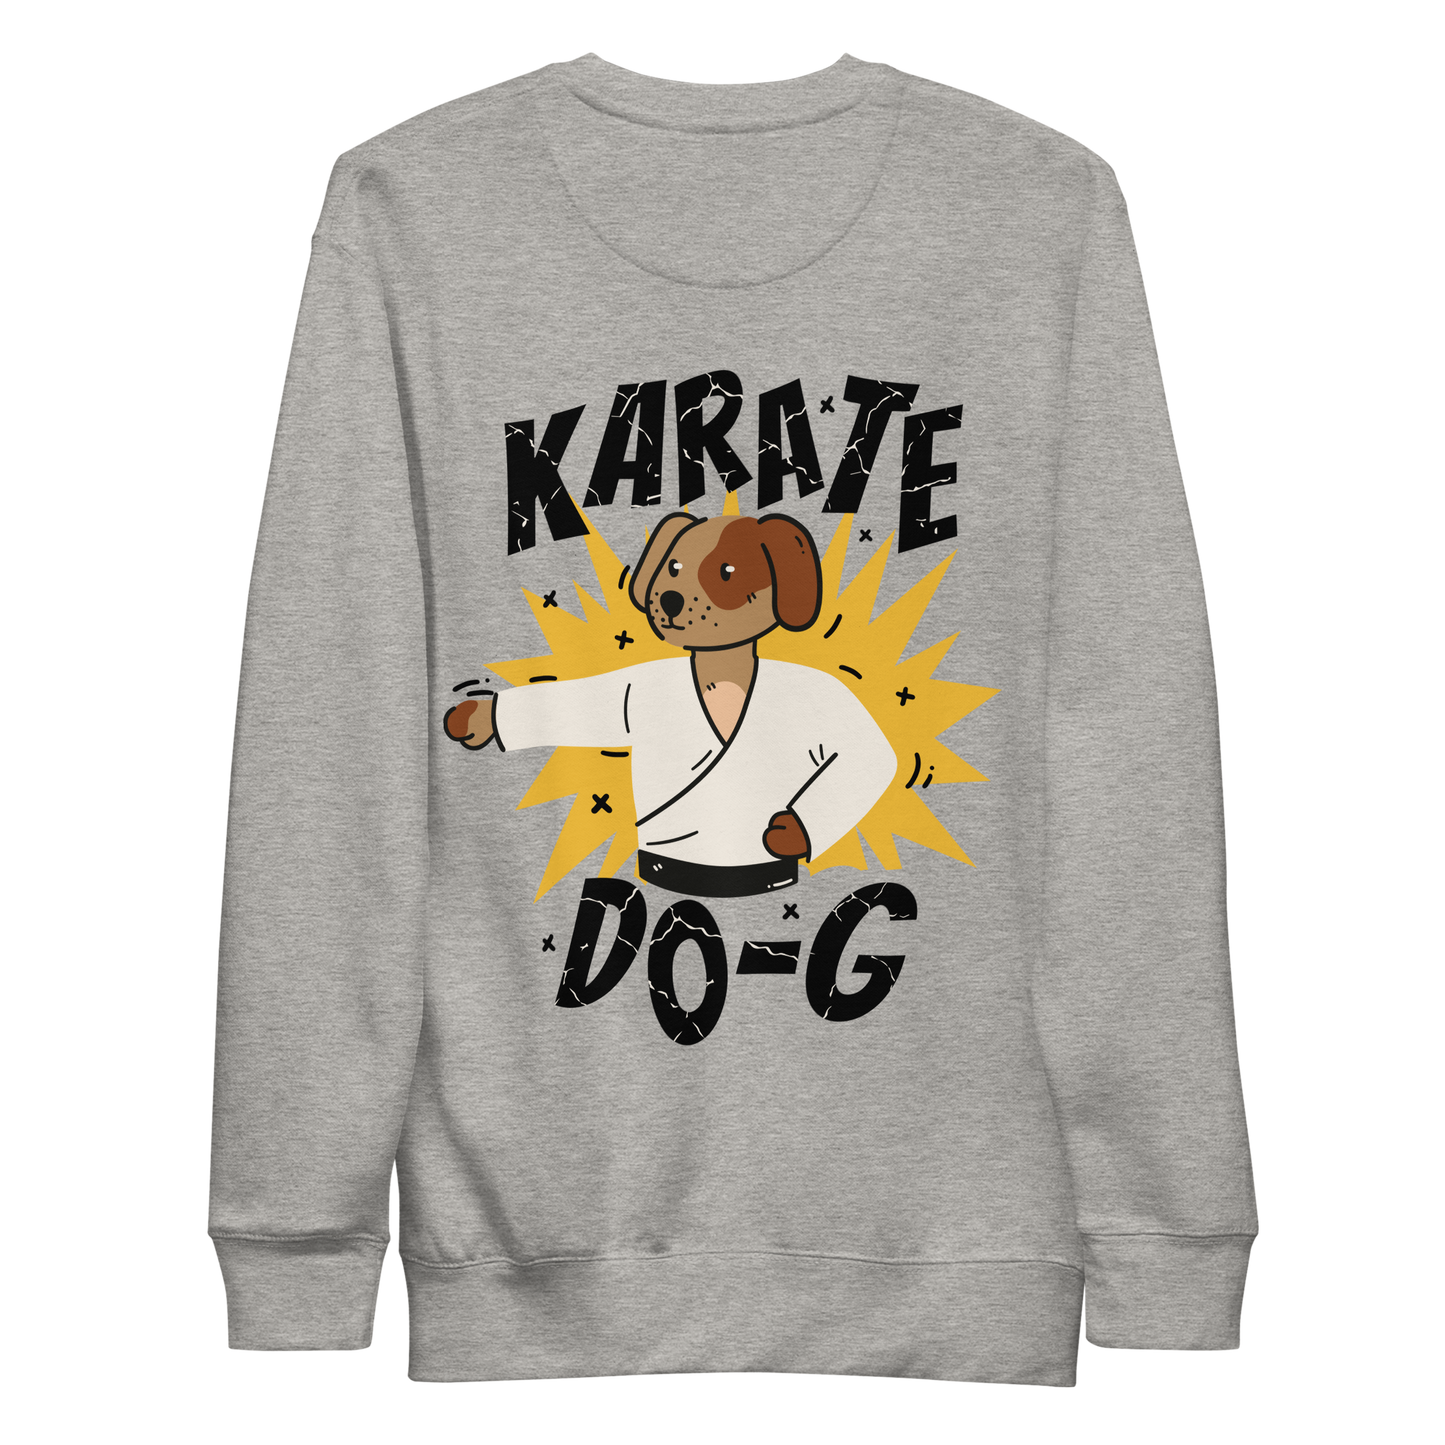 Karate do-g dog | Unisex Premium Sweatshirt - F&B